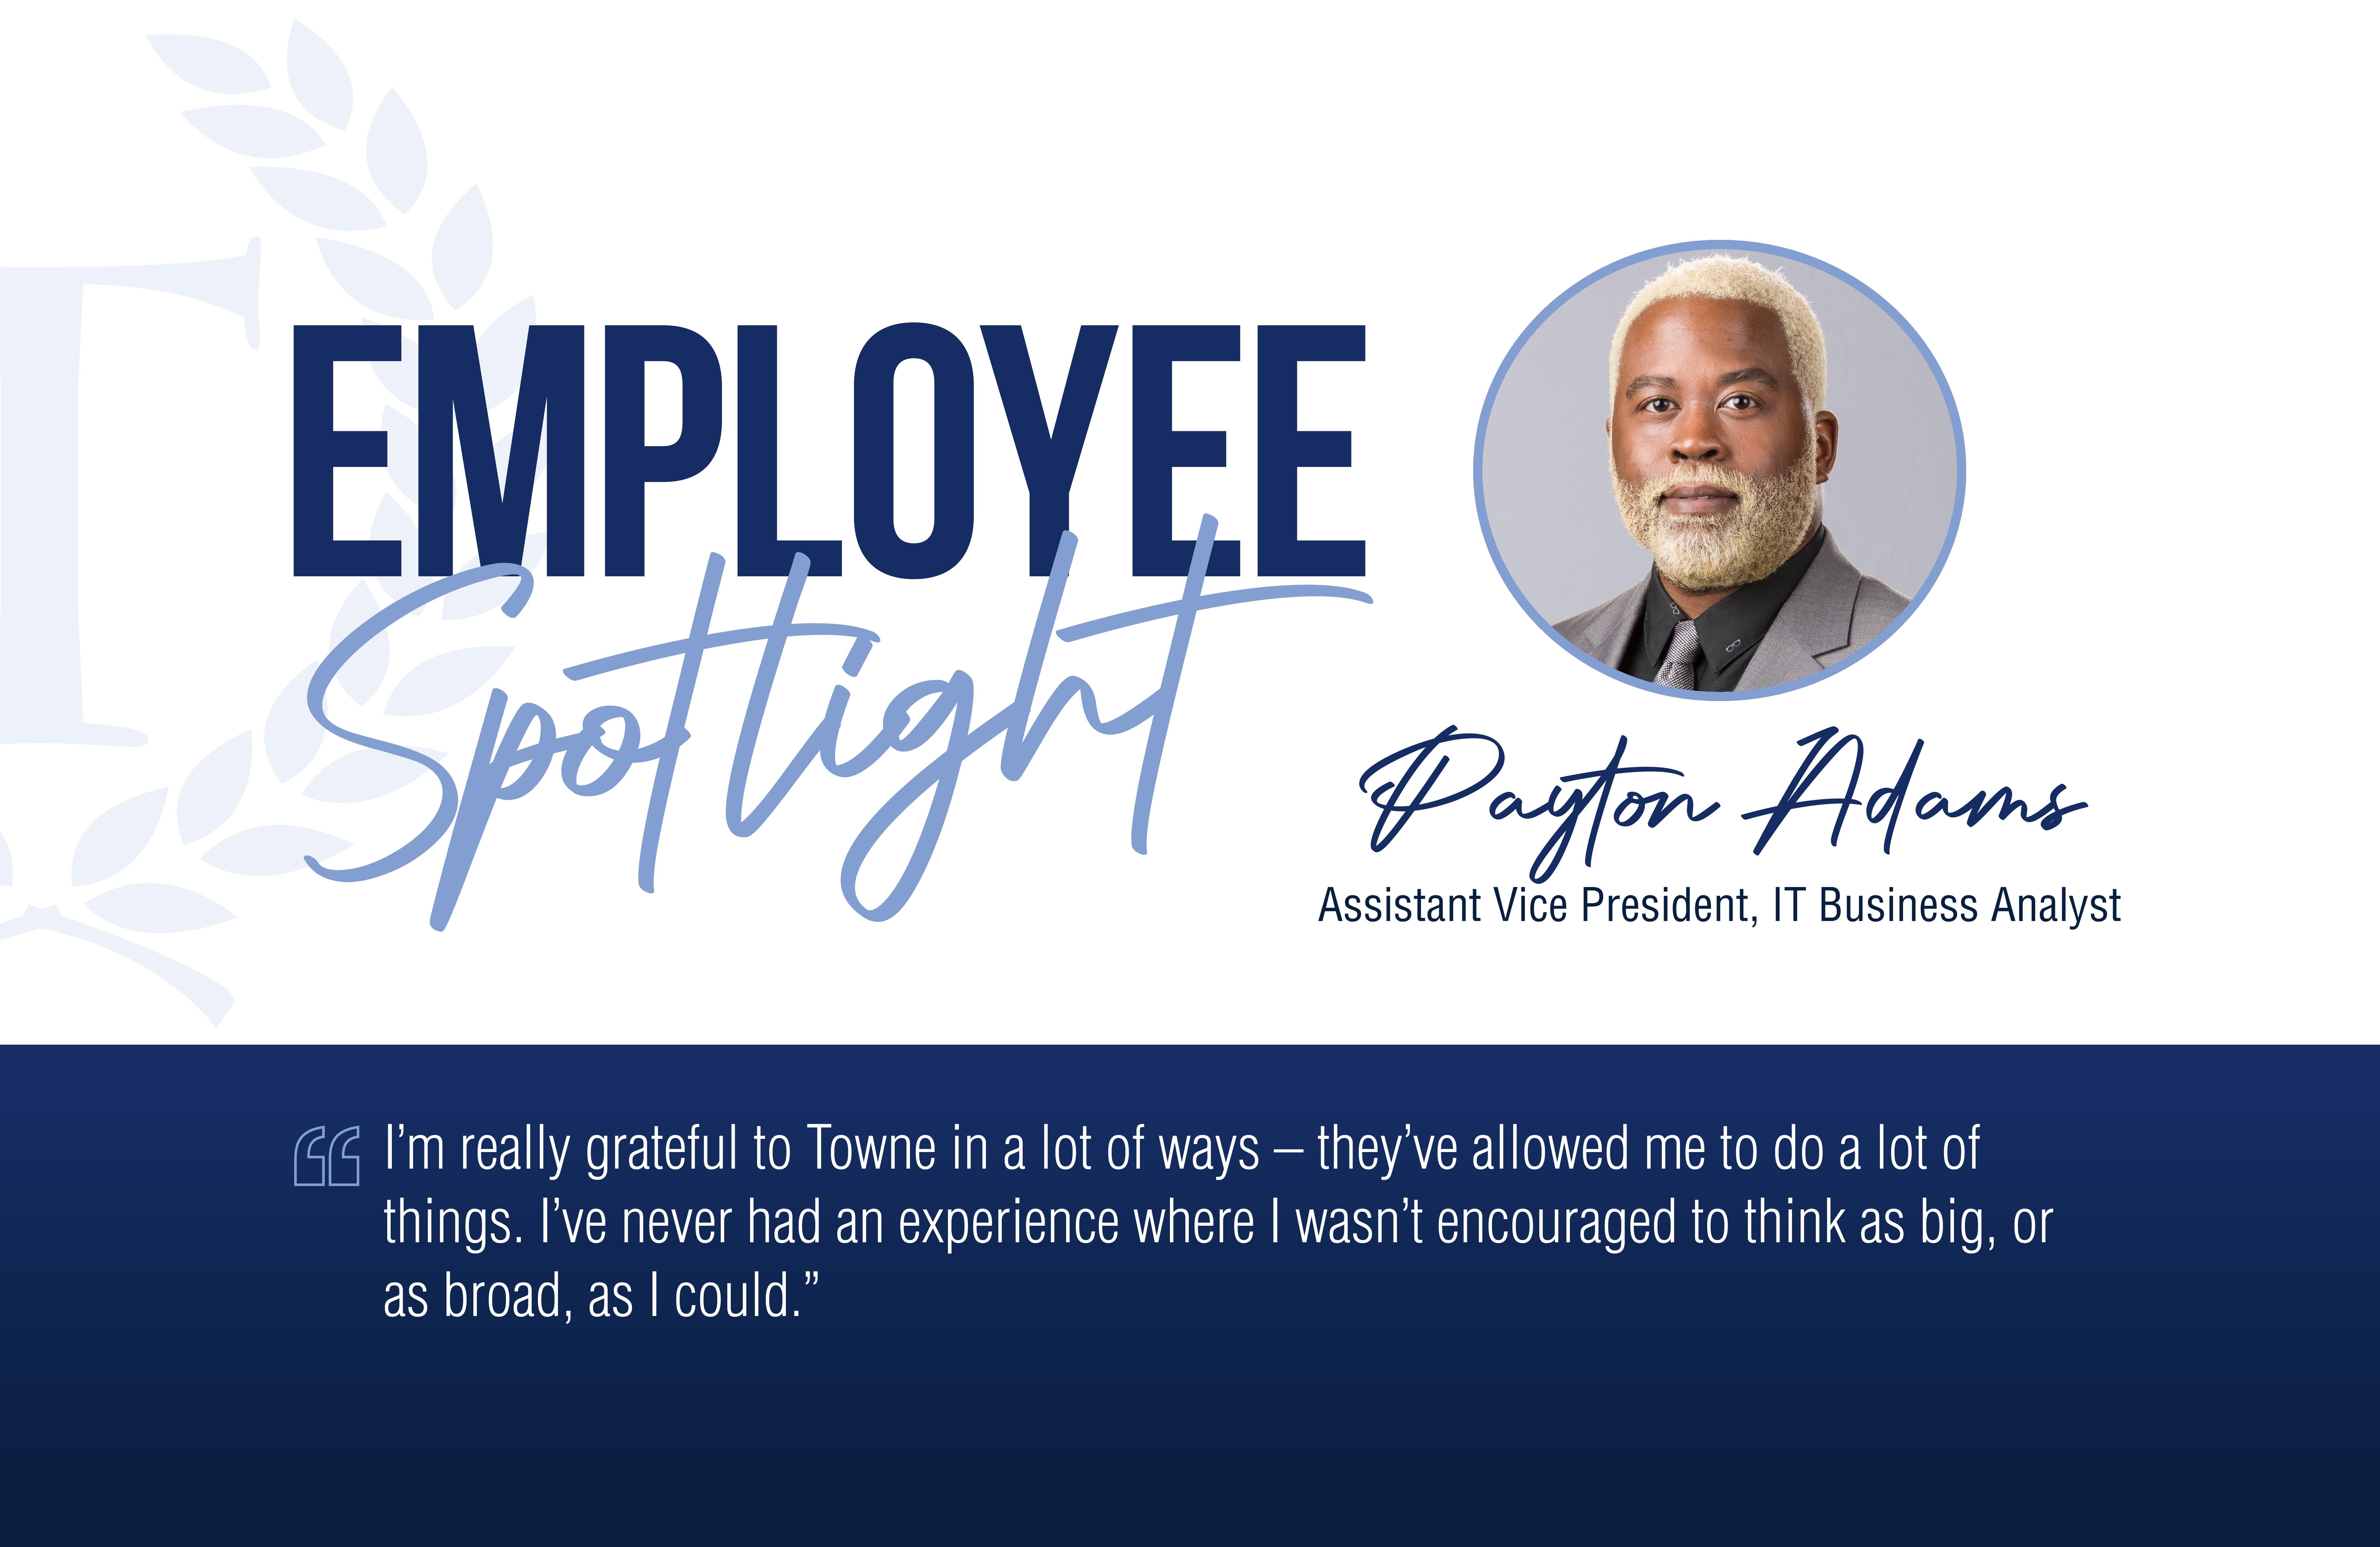 Employee Spotlight: Payton Adams